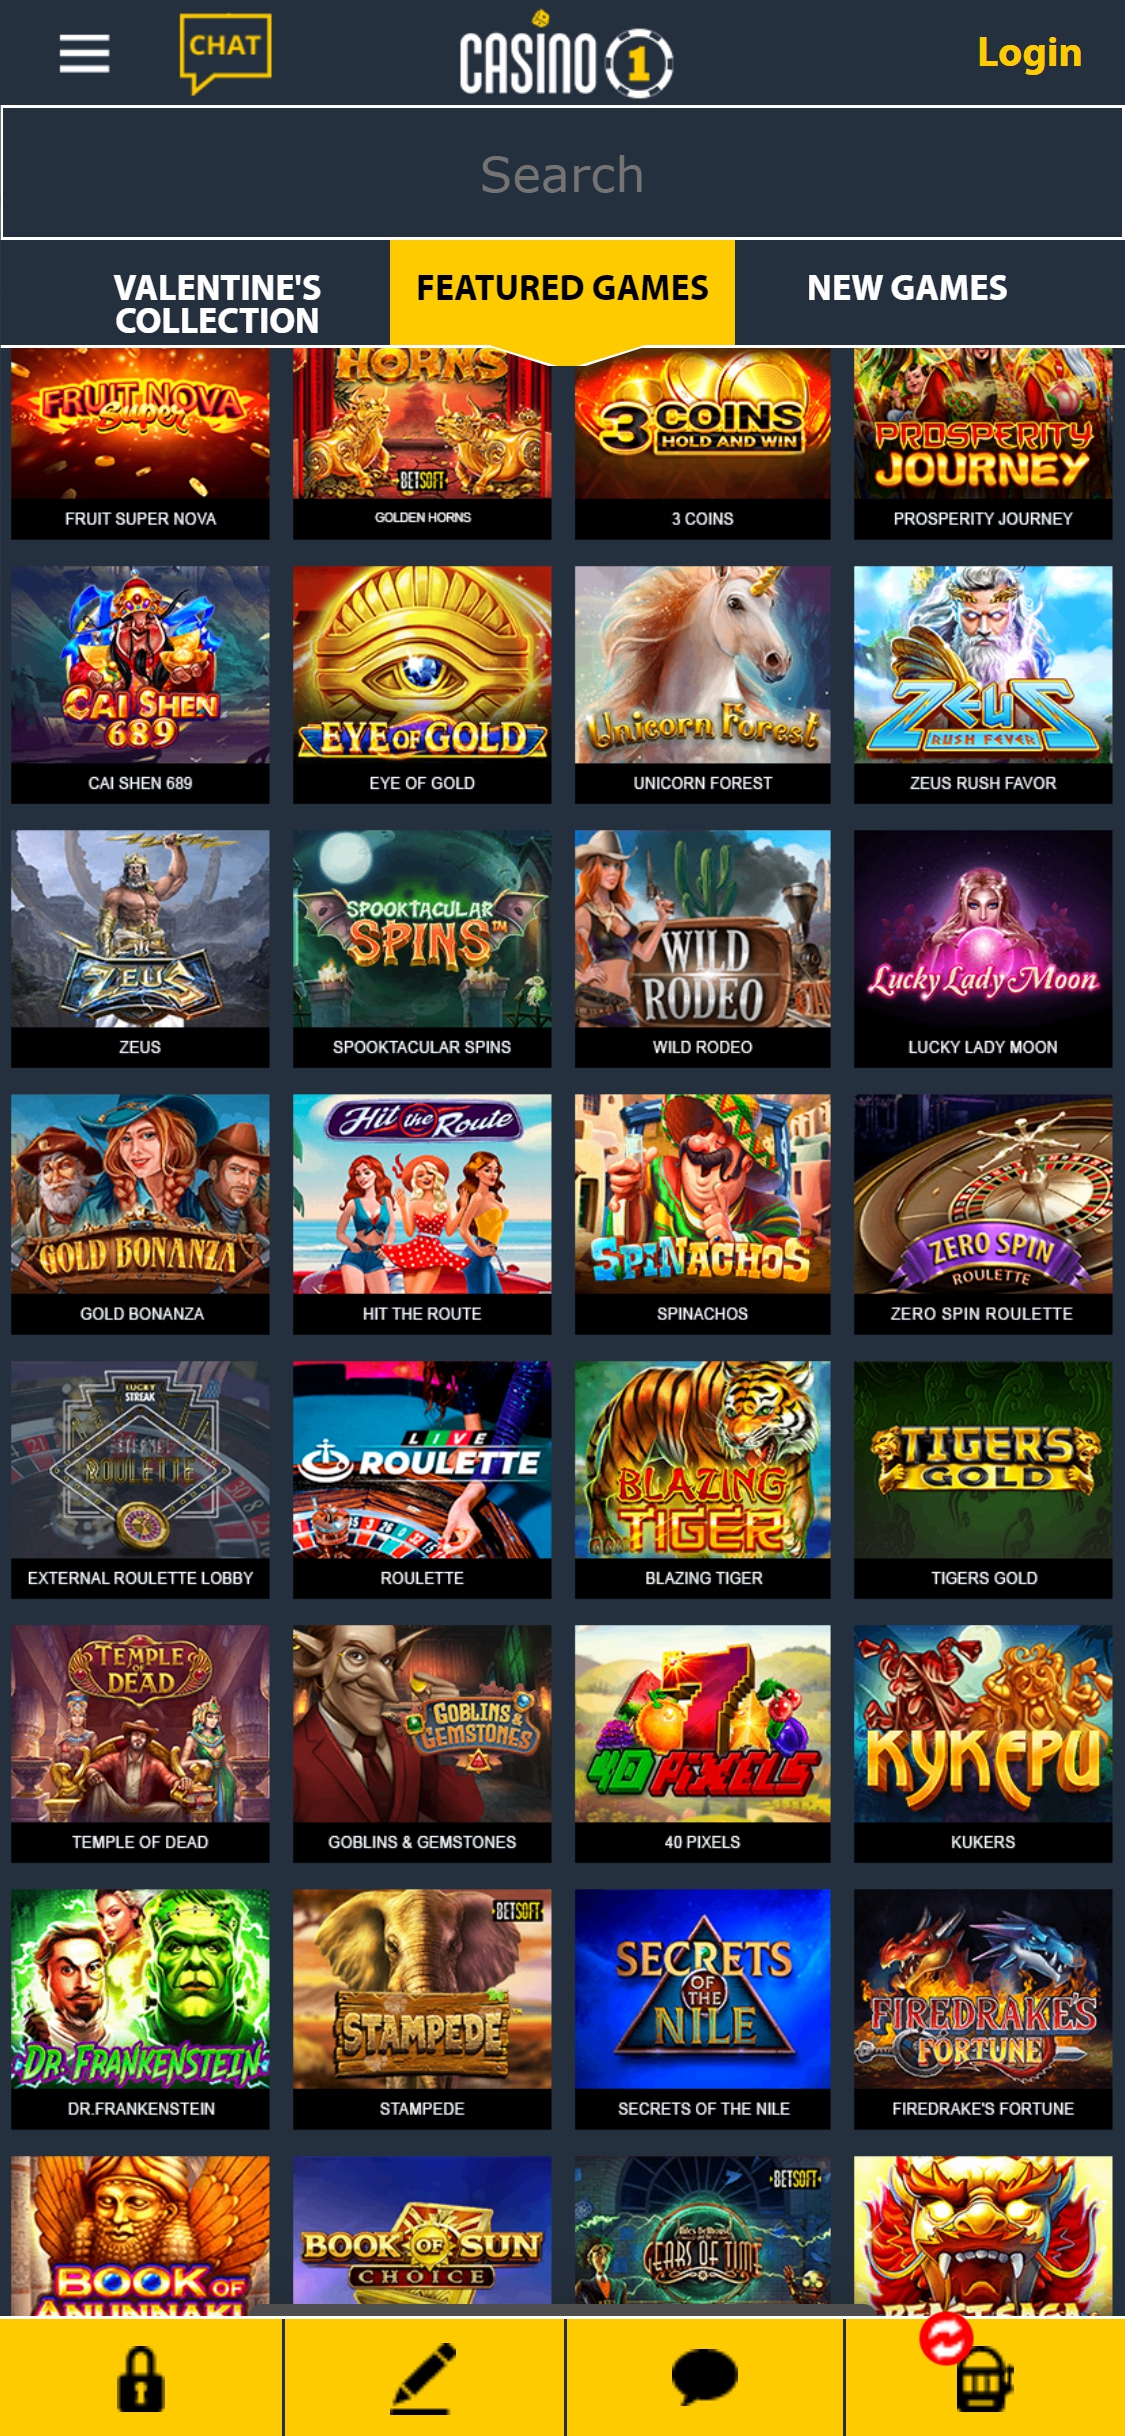 Casino 1 Club Mobile Games Review